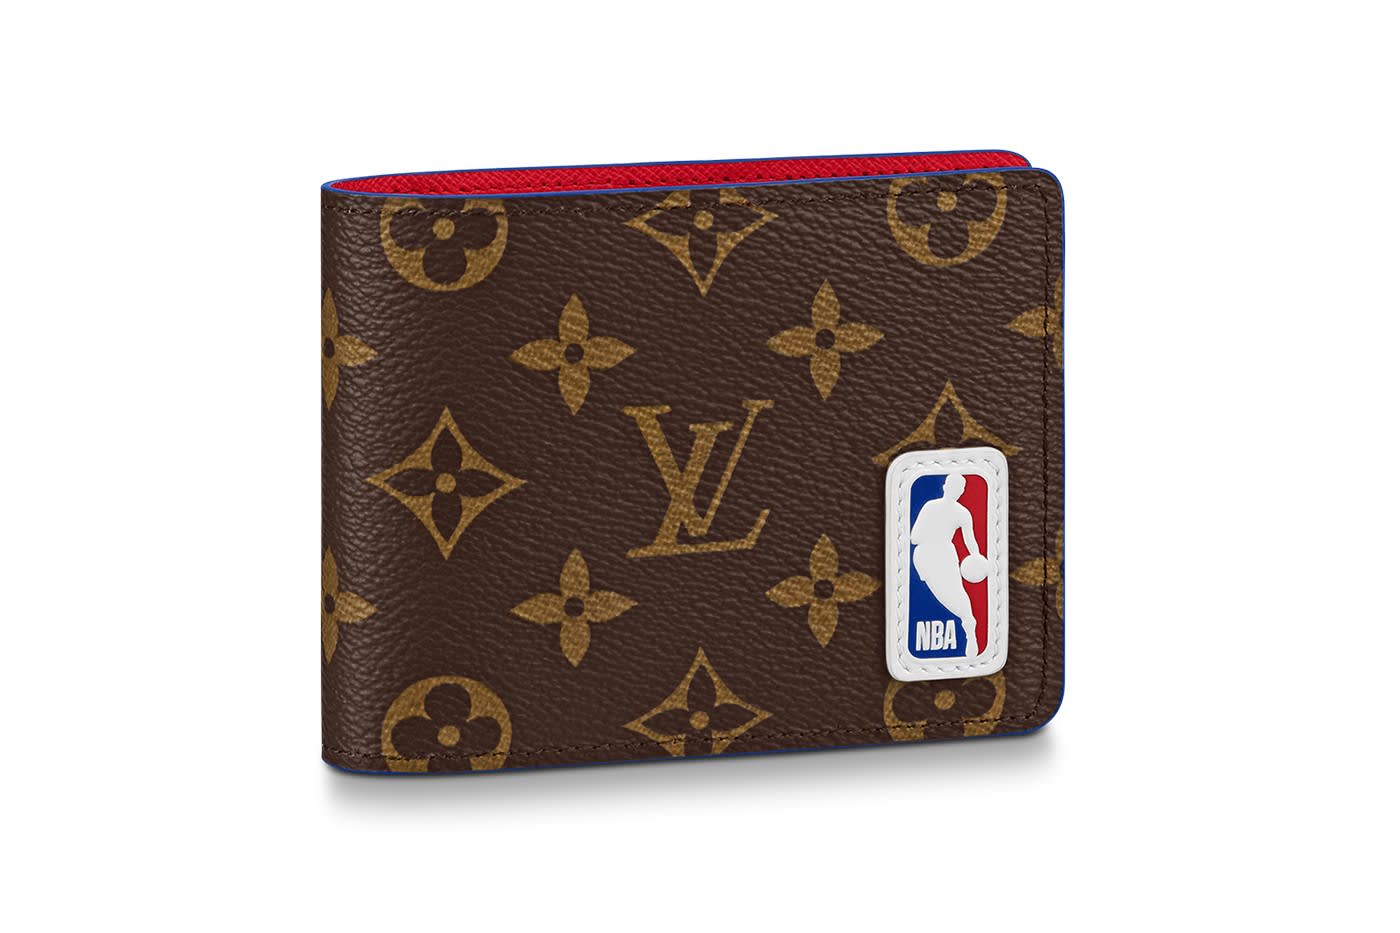 Louis Vuitton Launches LV x NBA Capsule Collection